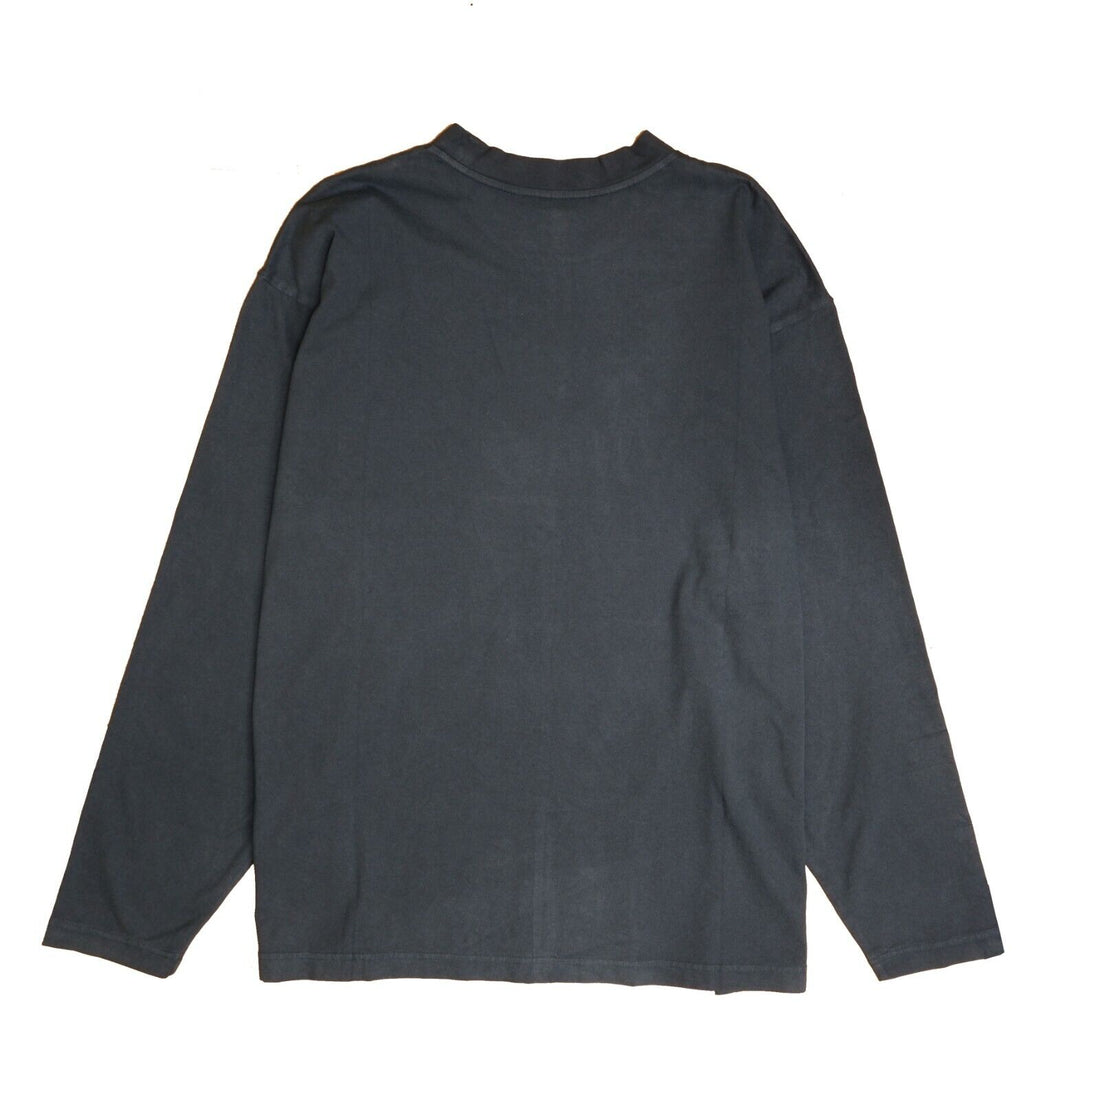 Yeezy Gap Unreleased Long Sleeve T-Shirt Size 2XL Black